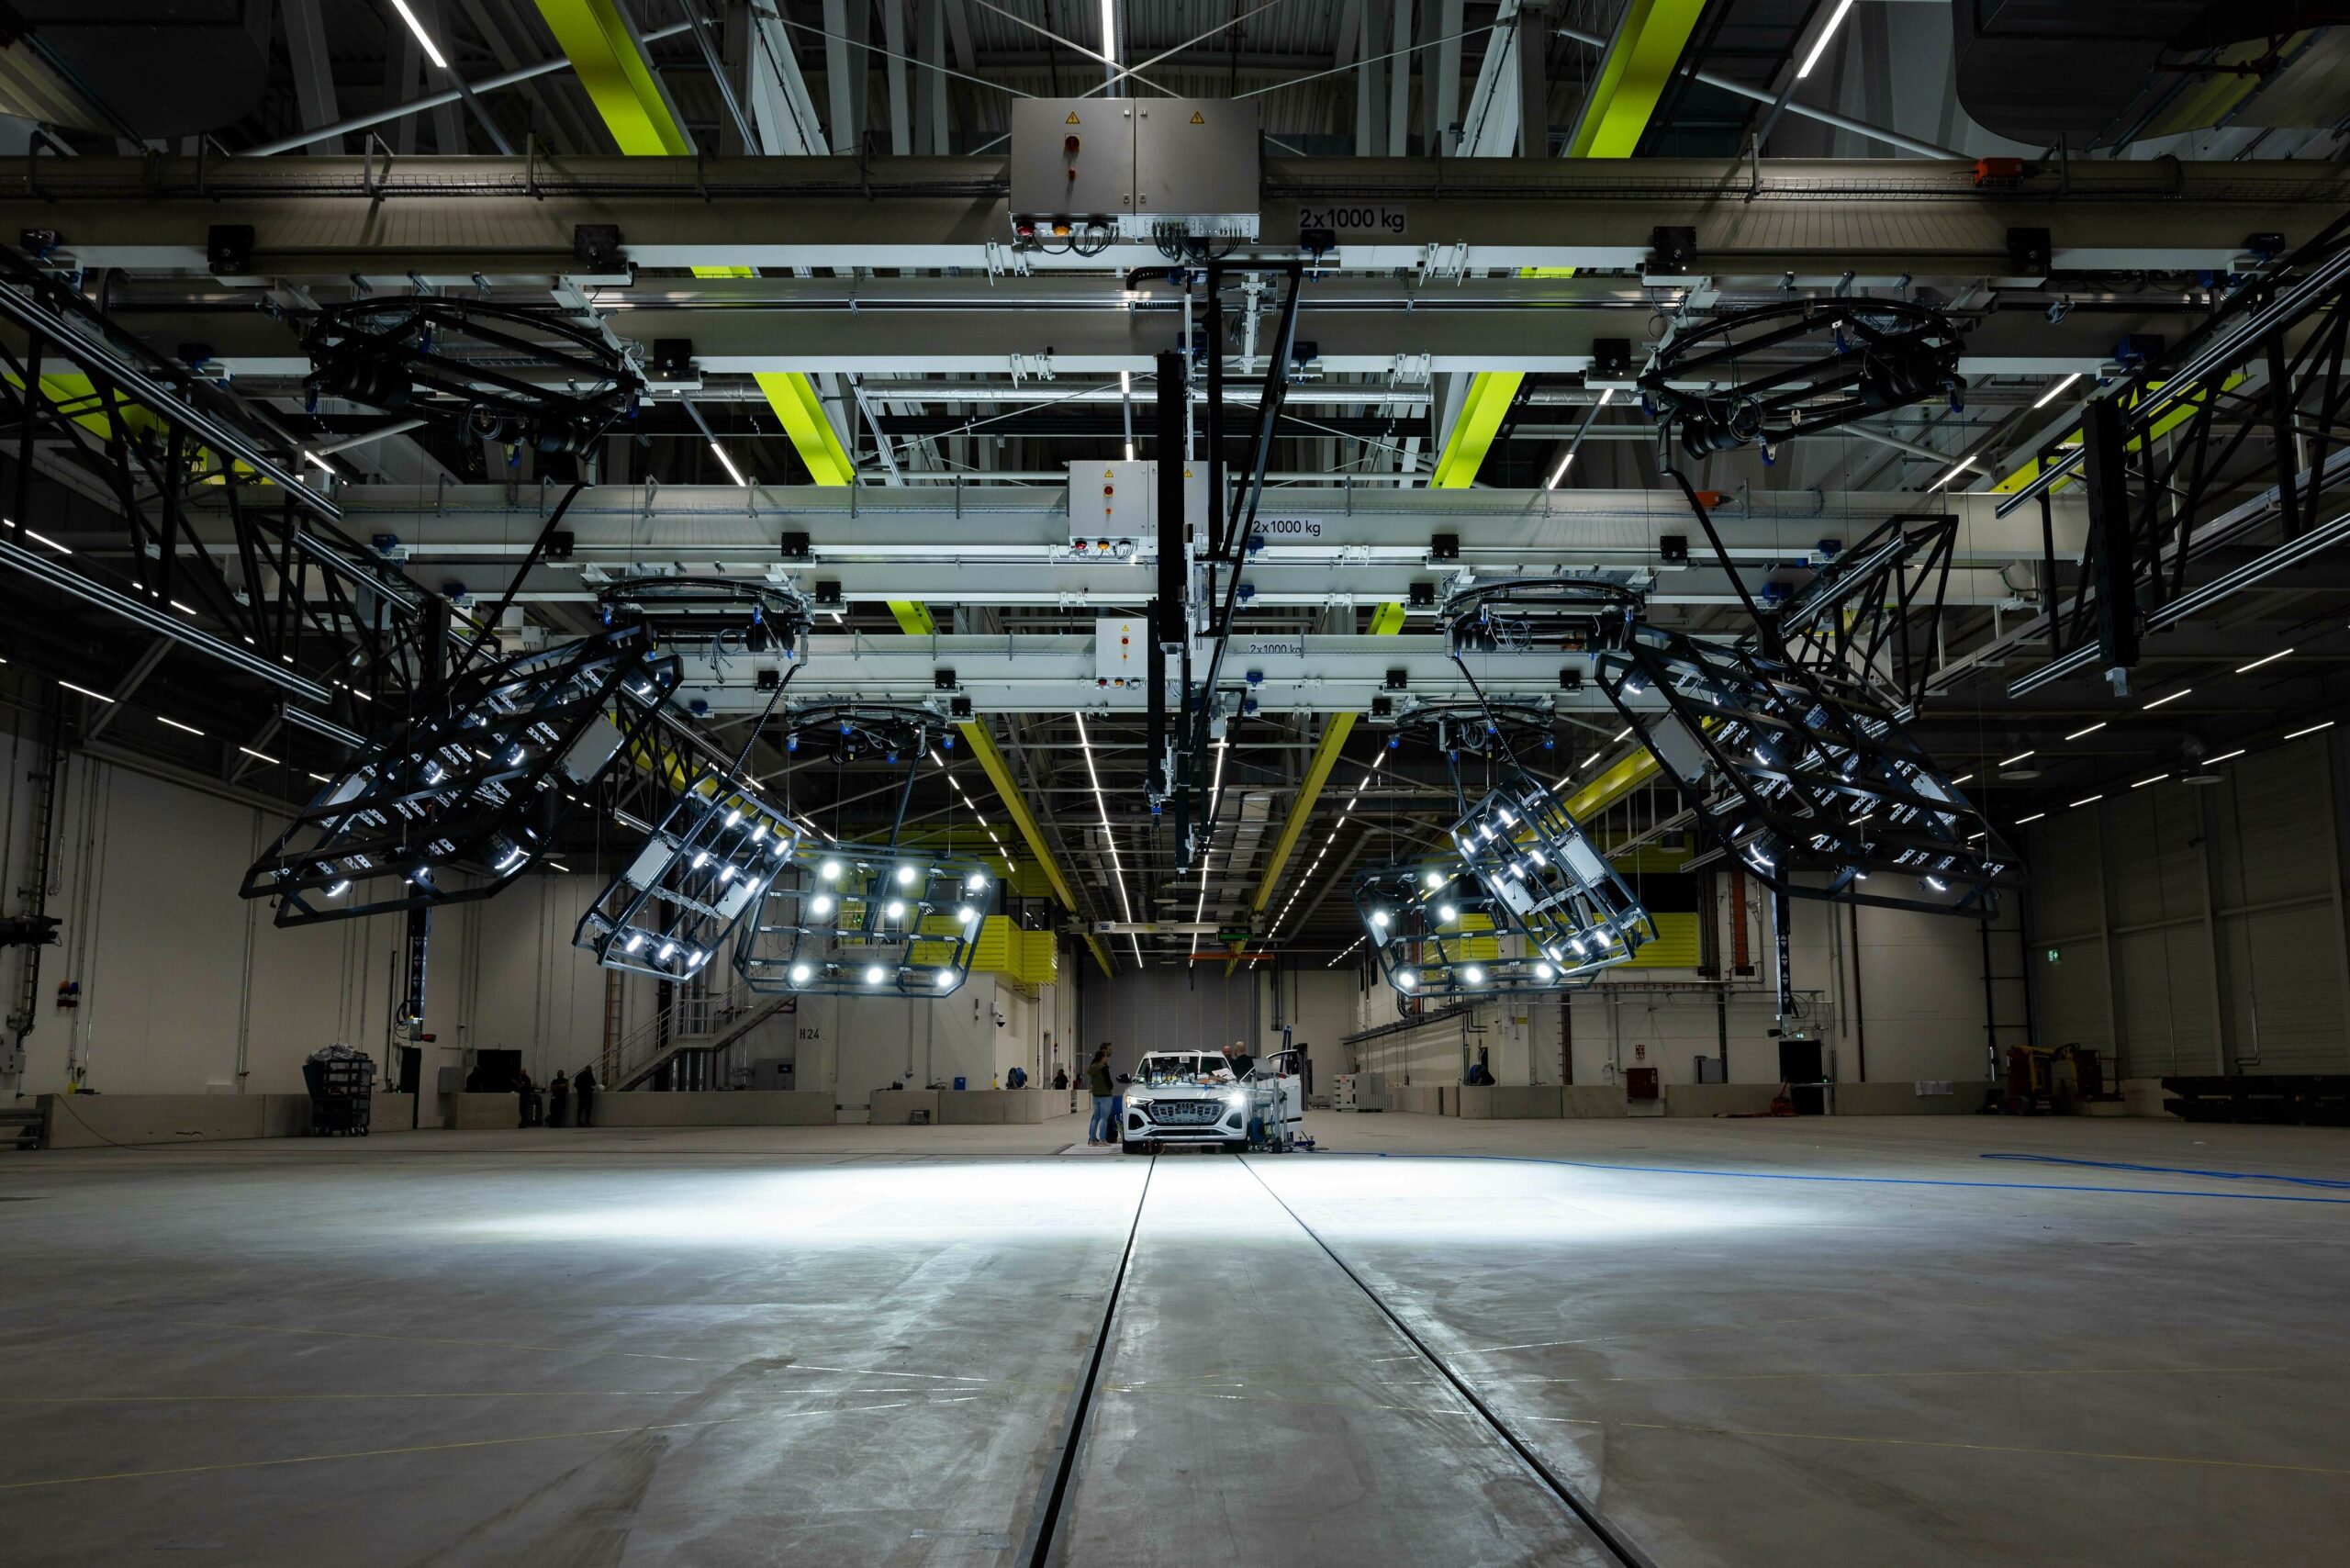 Audi Vehicle Safety Centre [2023]